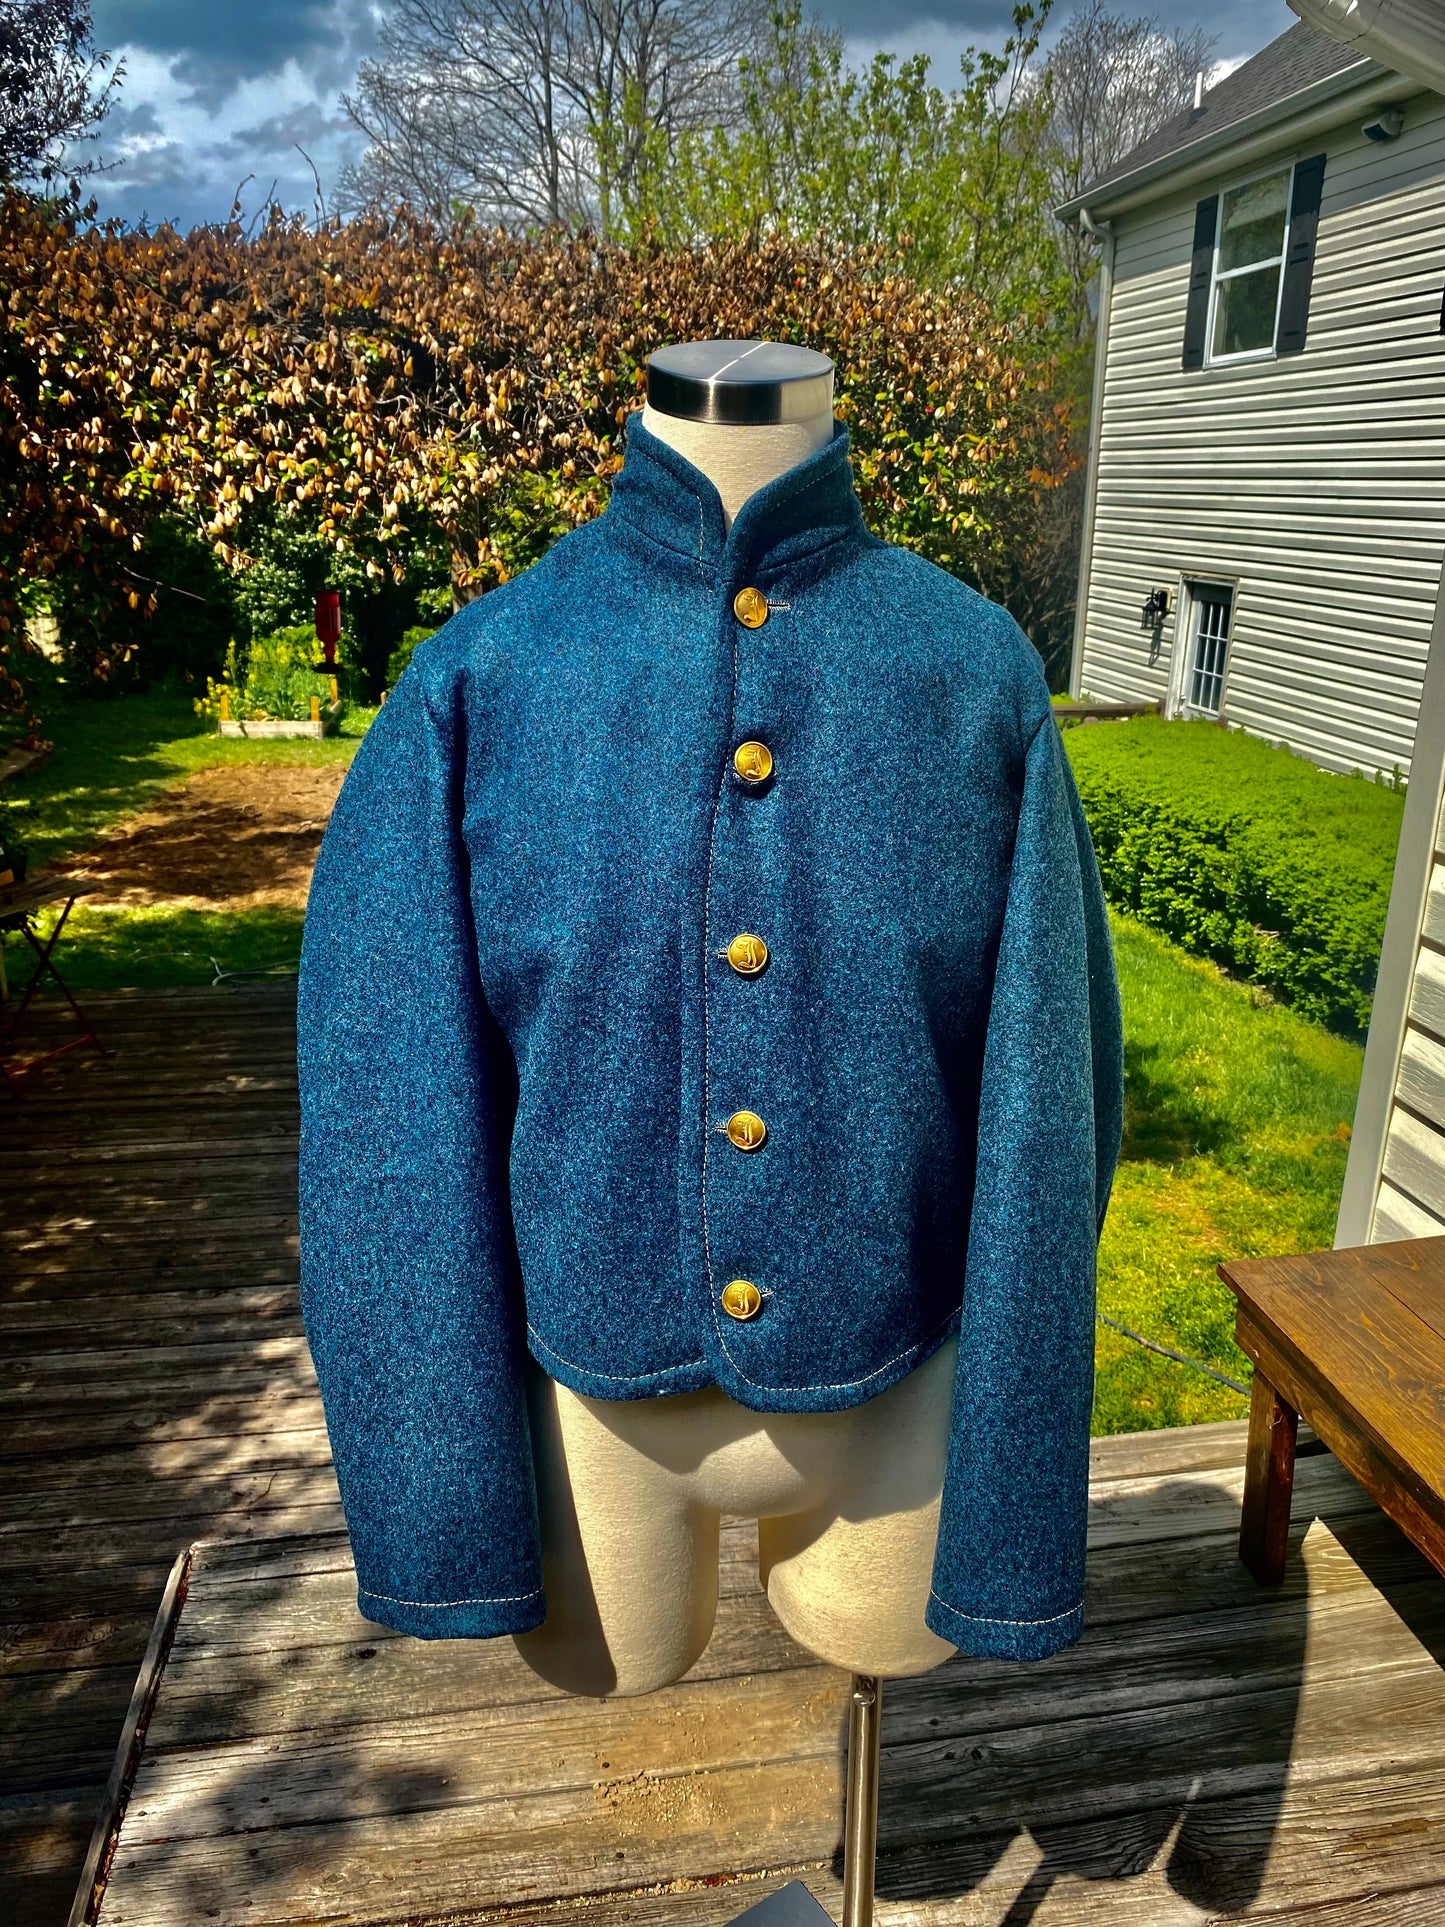 Group-Buy Charleston Depot Jacket 1863-1865